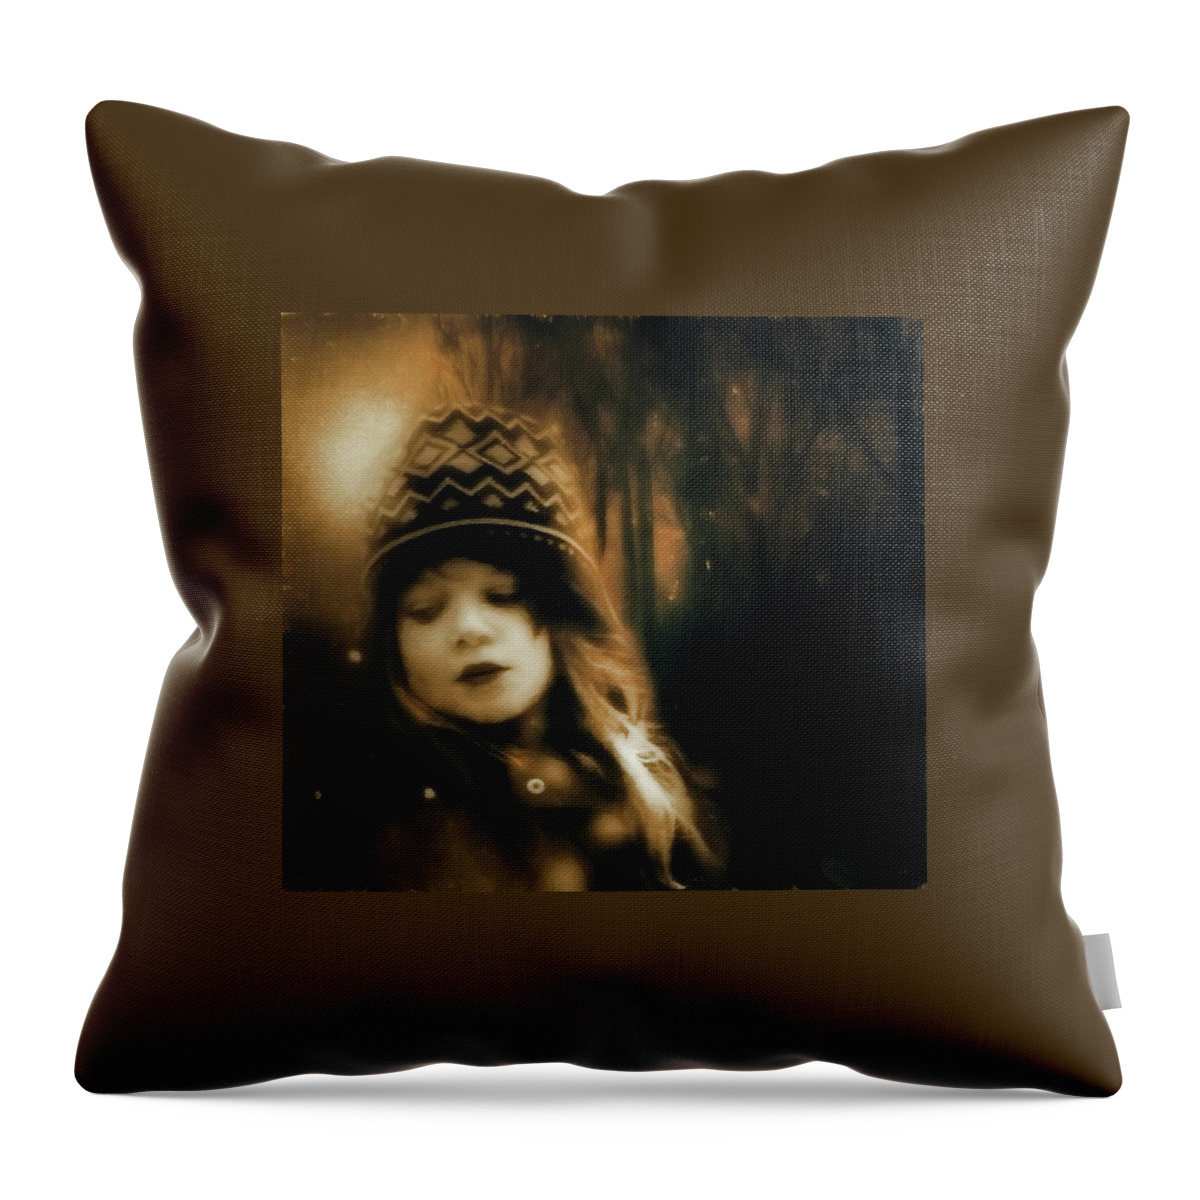  Throw Pillow featuring the photograph Ranalddottir by Cybele Moon